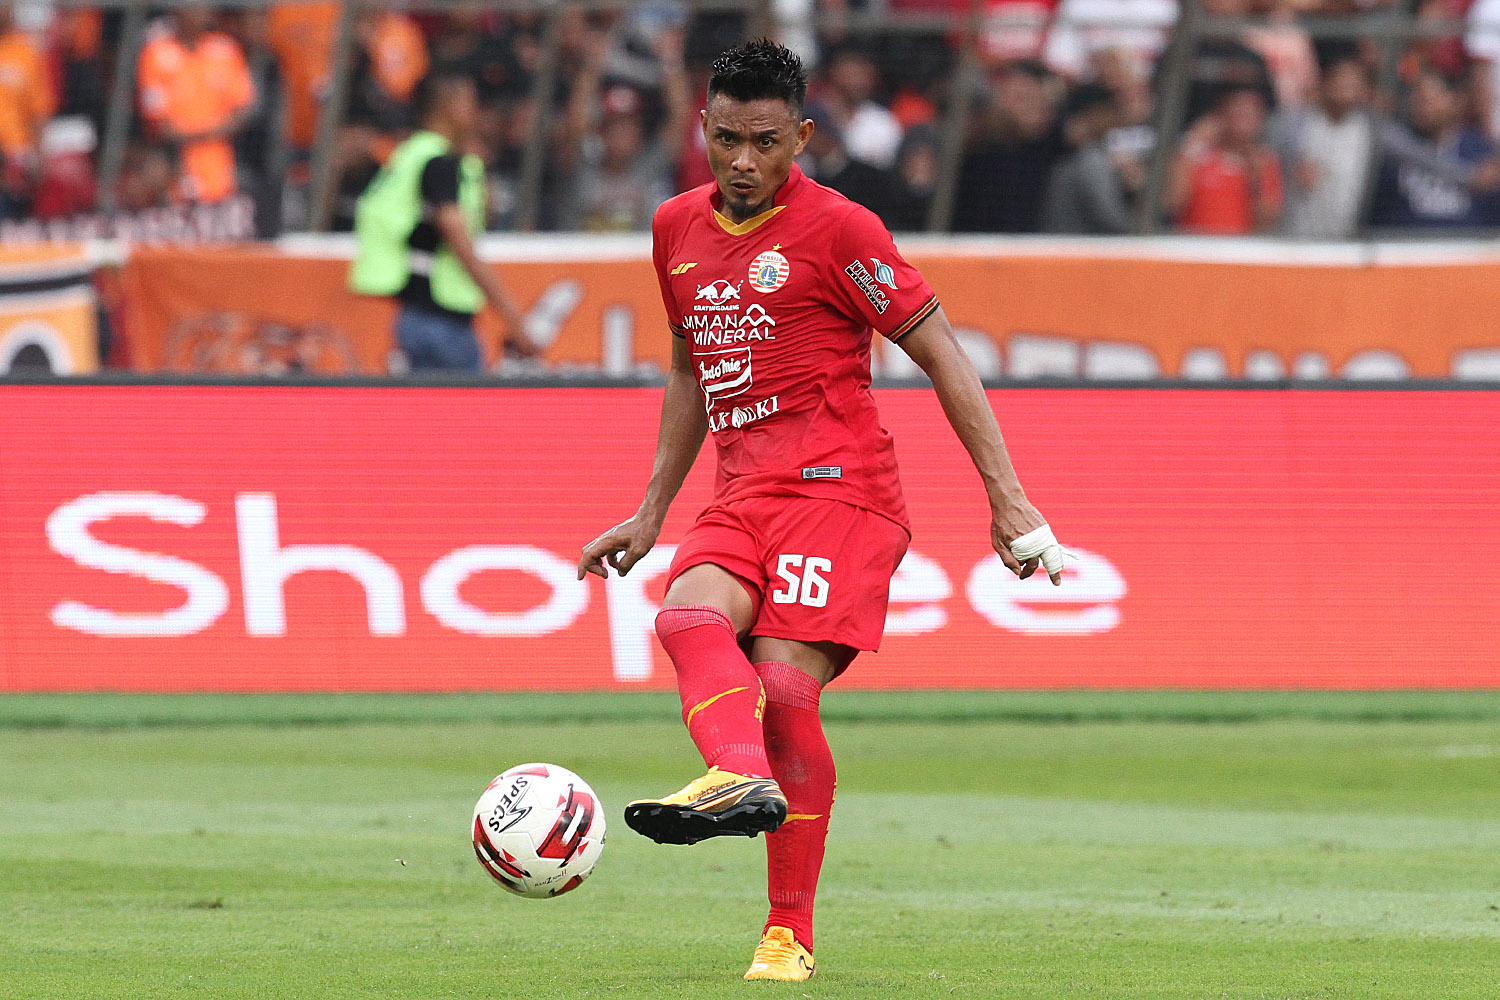 Lini Pertahanan Persija Jakarta Siap Tempur dalam Lanjutan Liga 1 2020